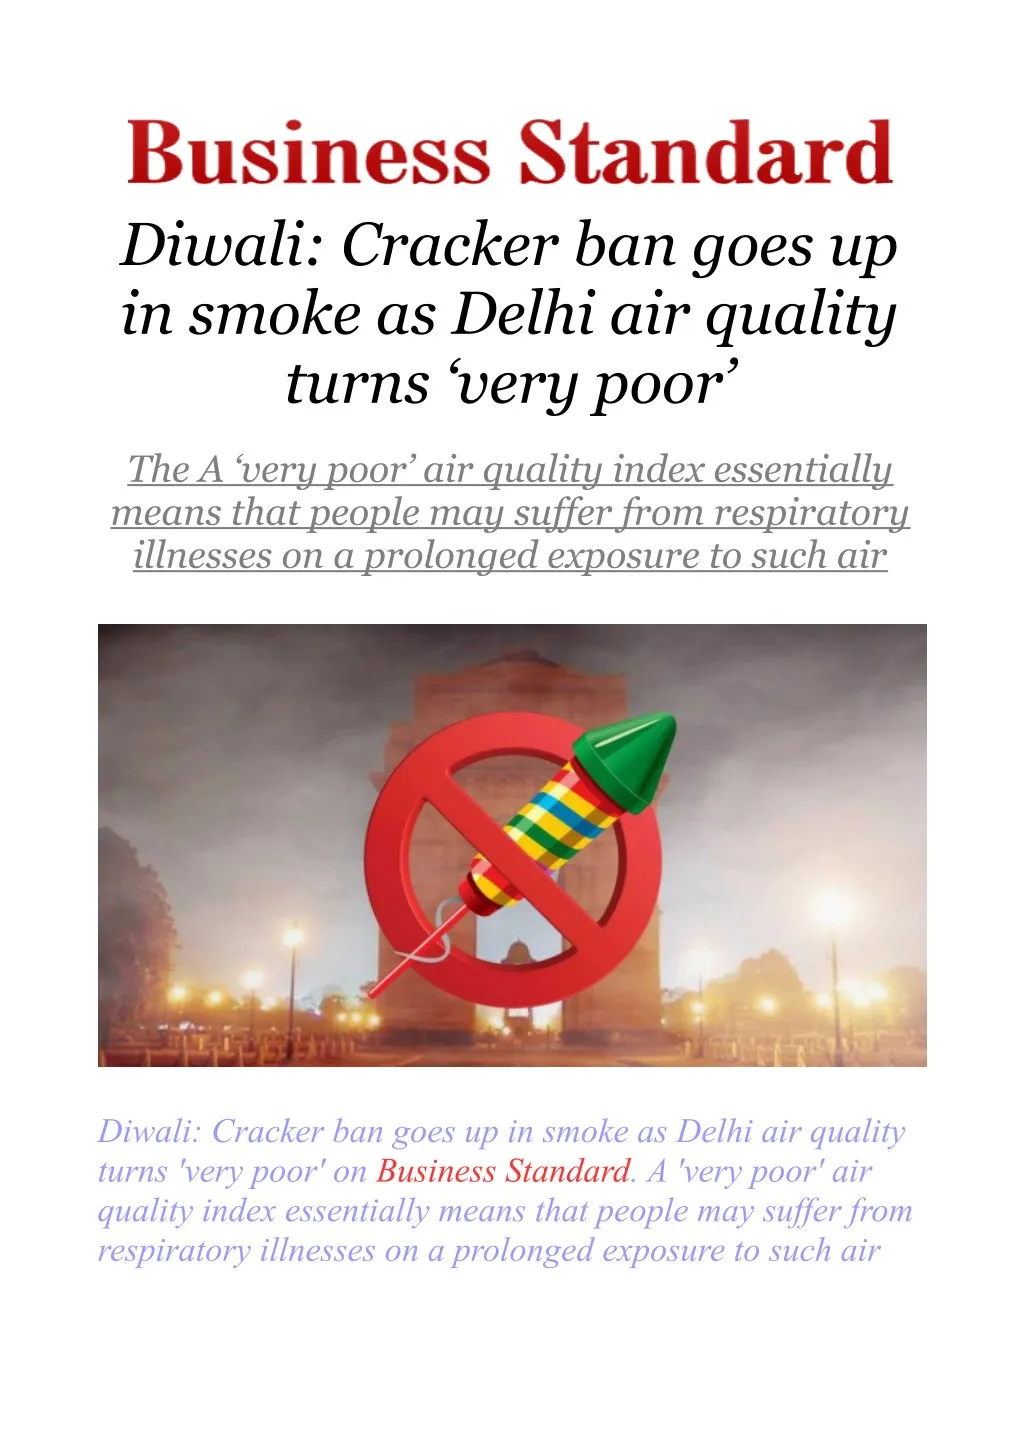 diwali cracker ban goes up in smoke as delhi